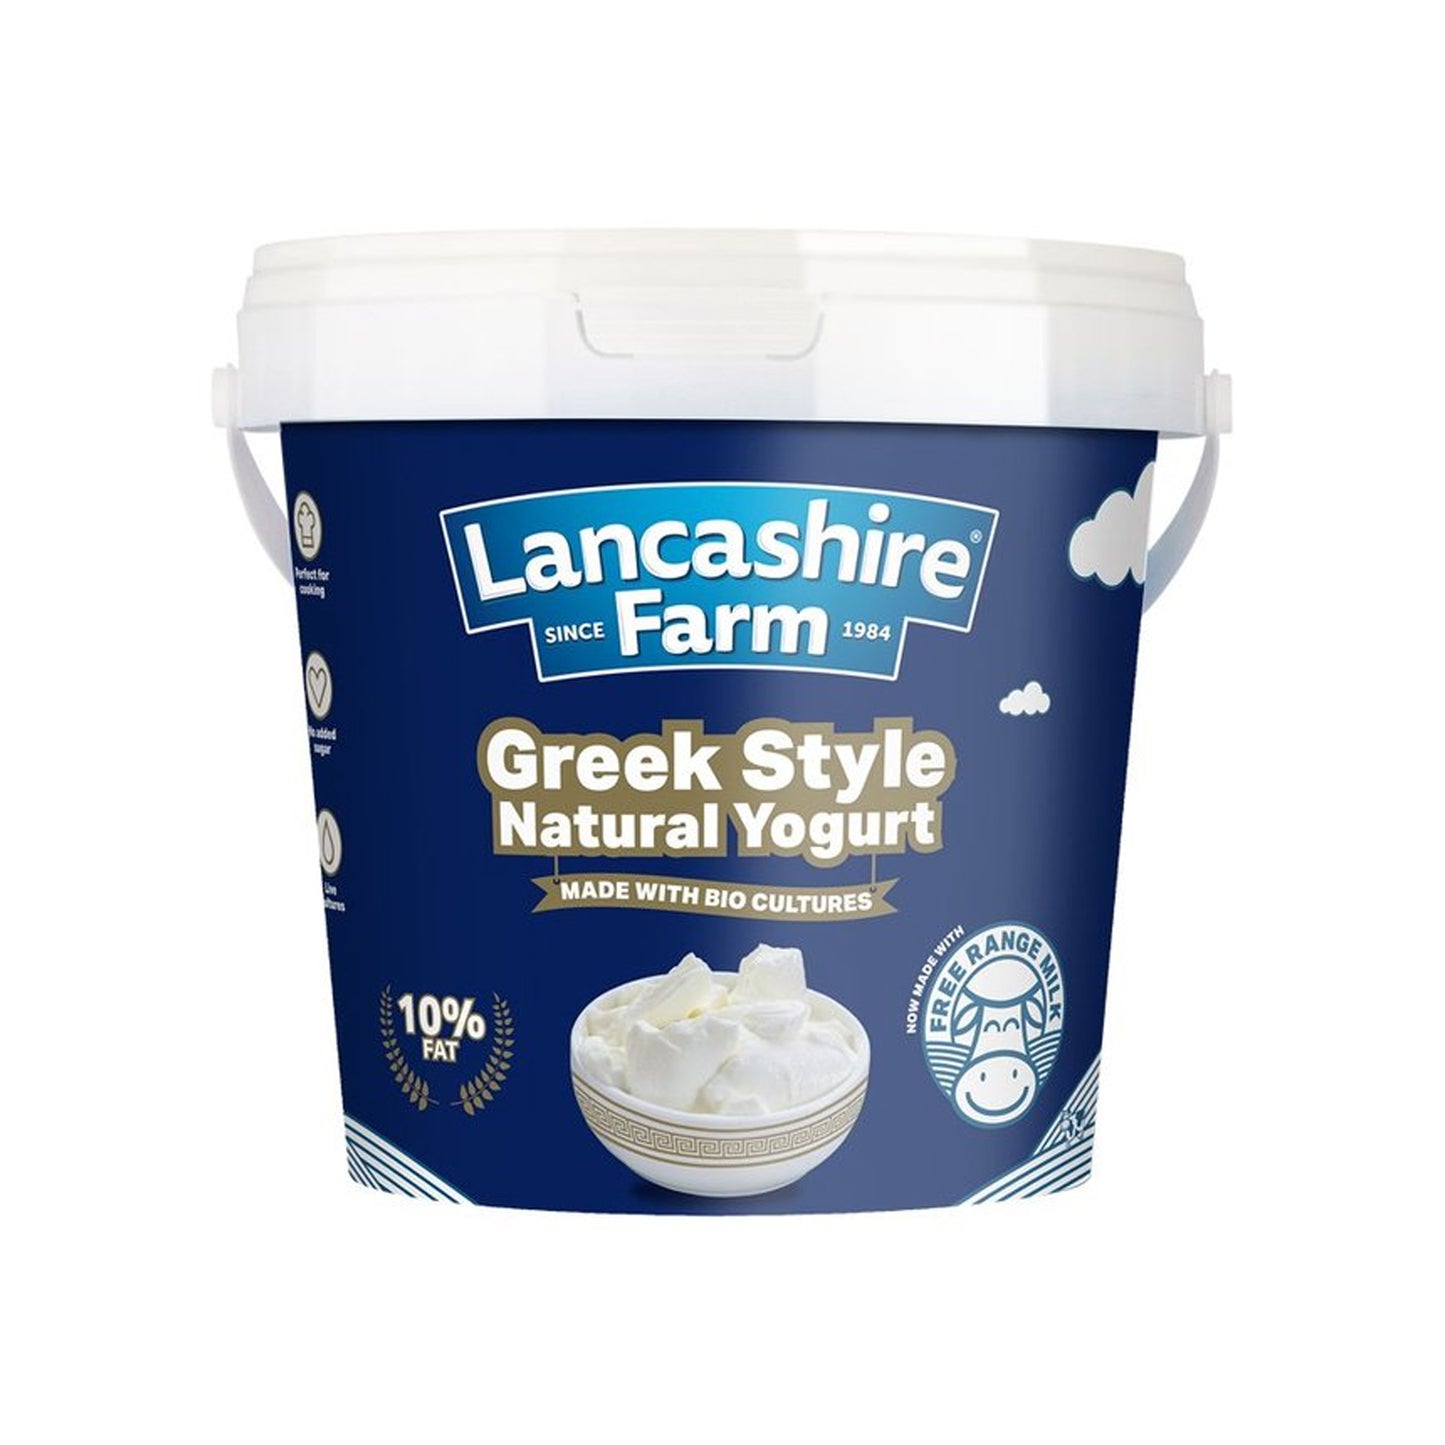 Lancashire Farm Greek Style Natural Yogurt 400g